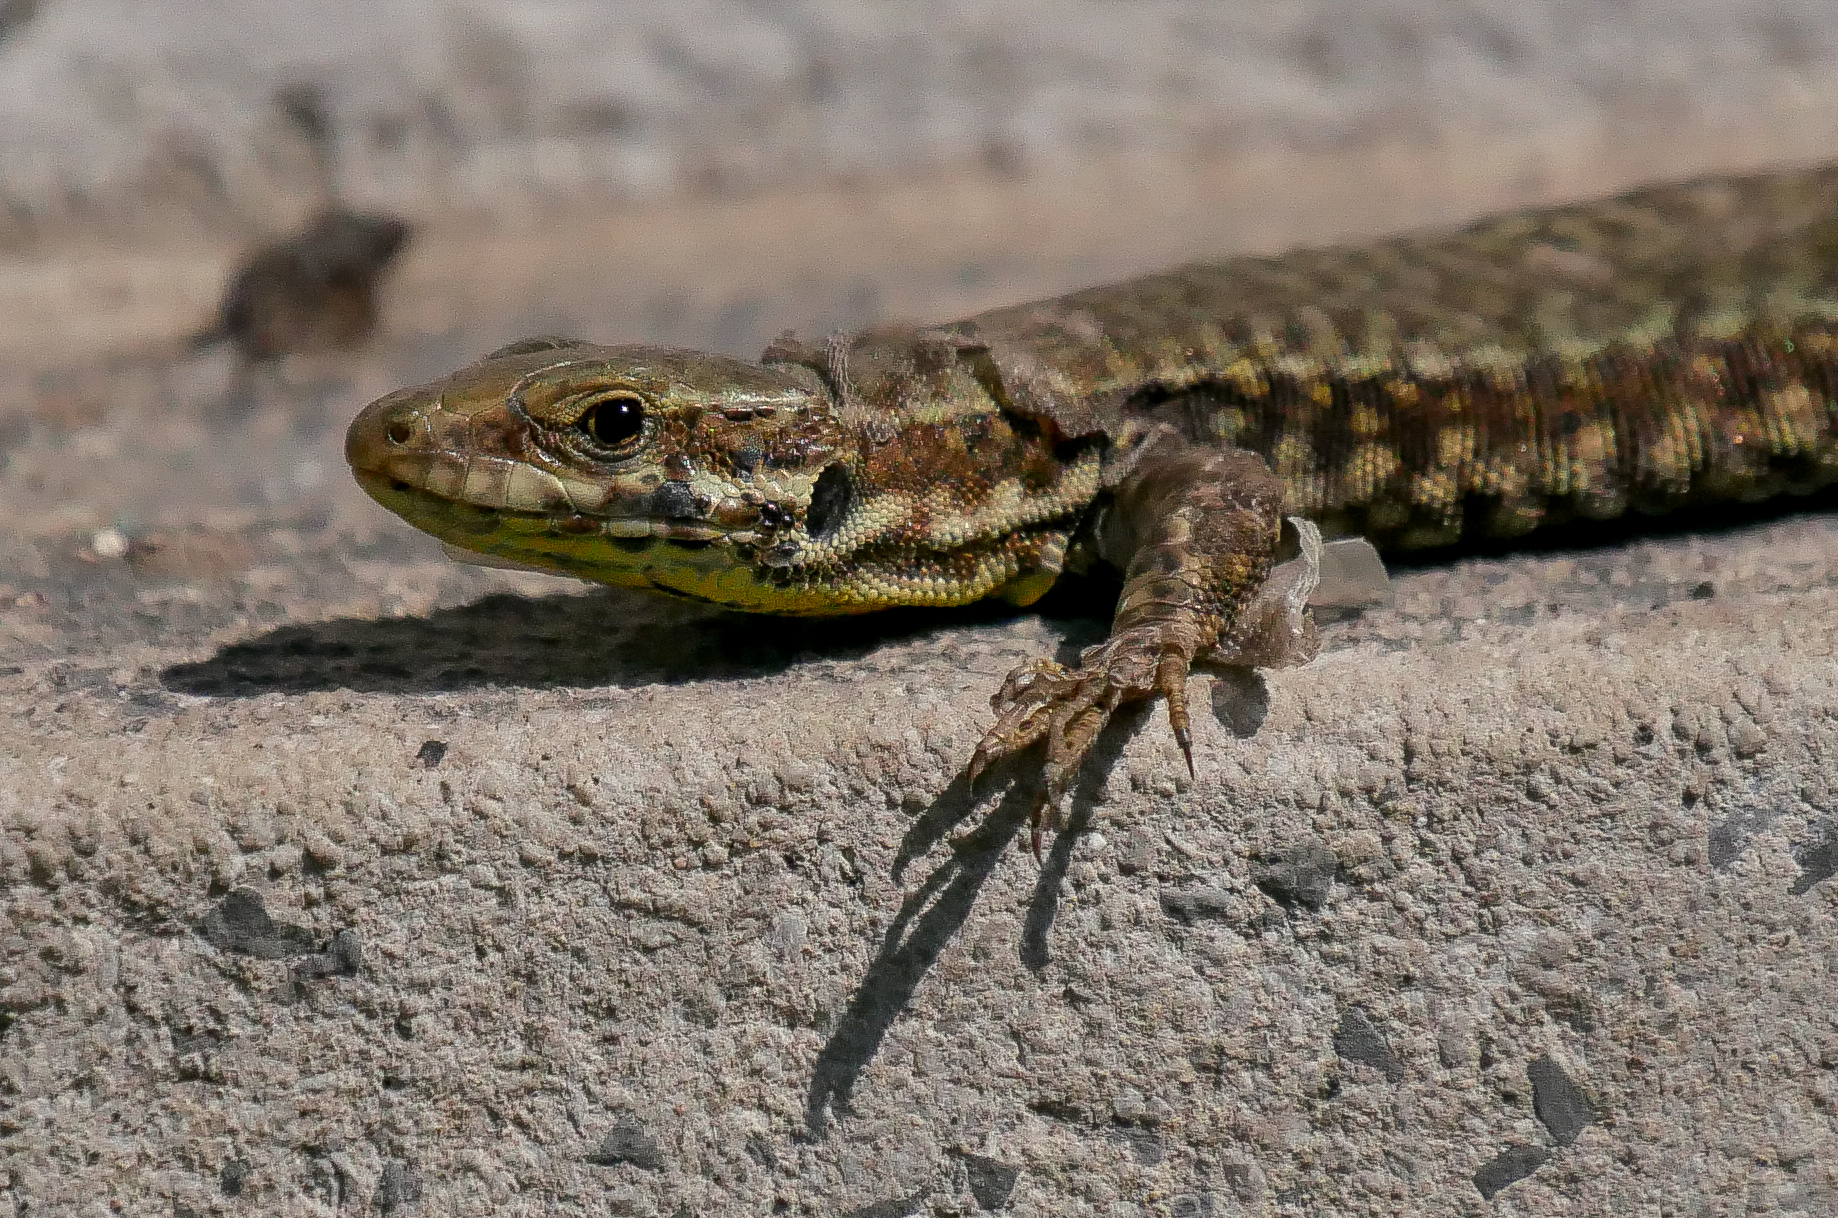 Lizard in Wetsuit...